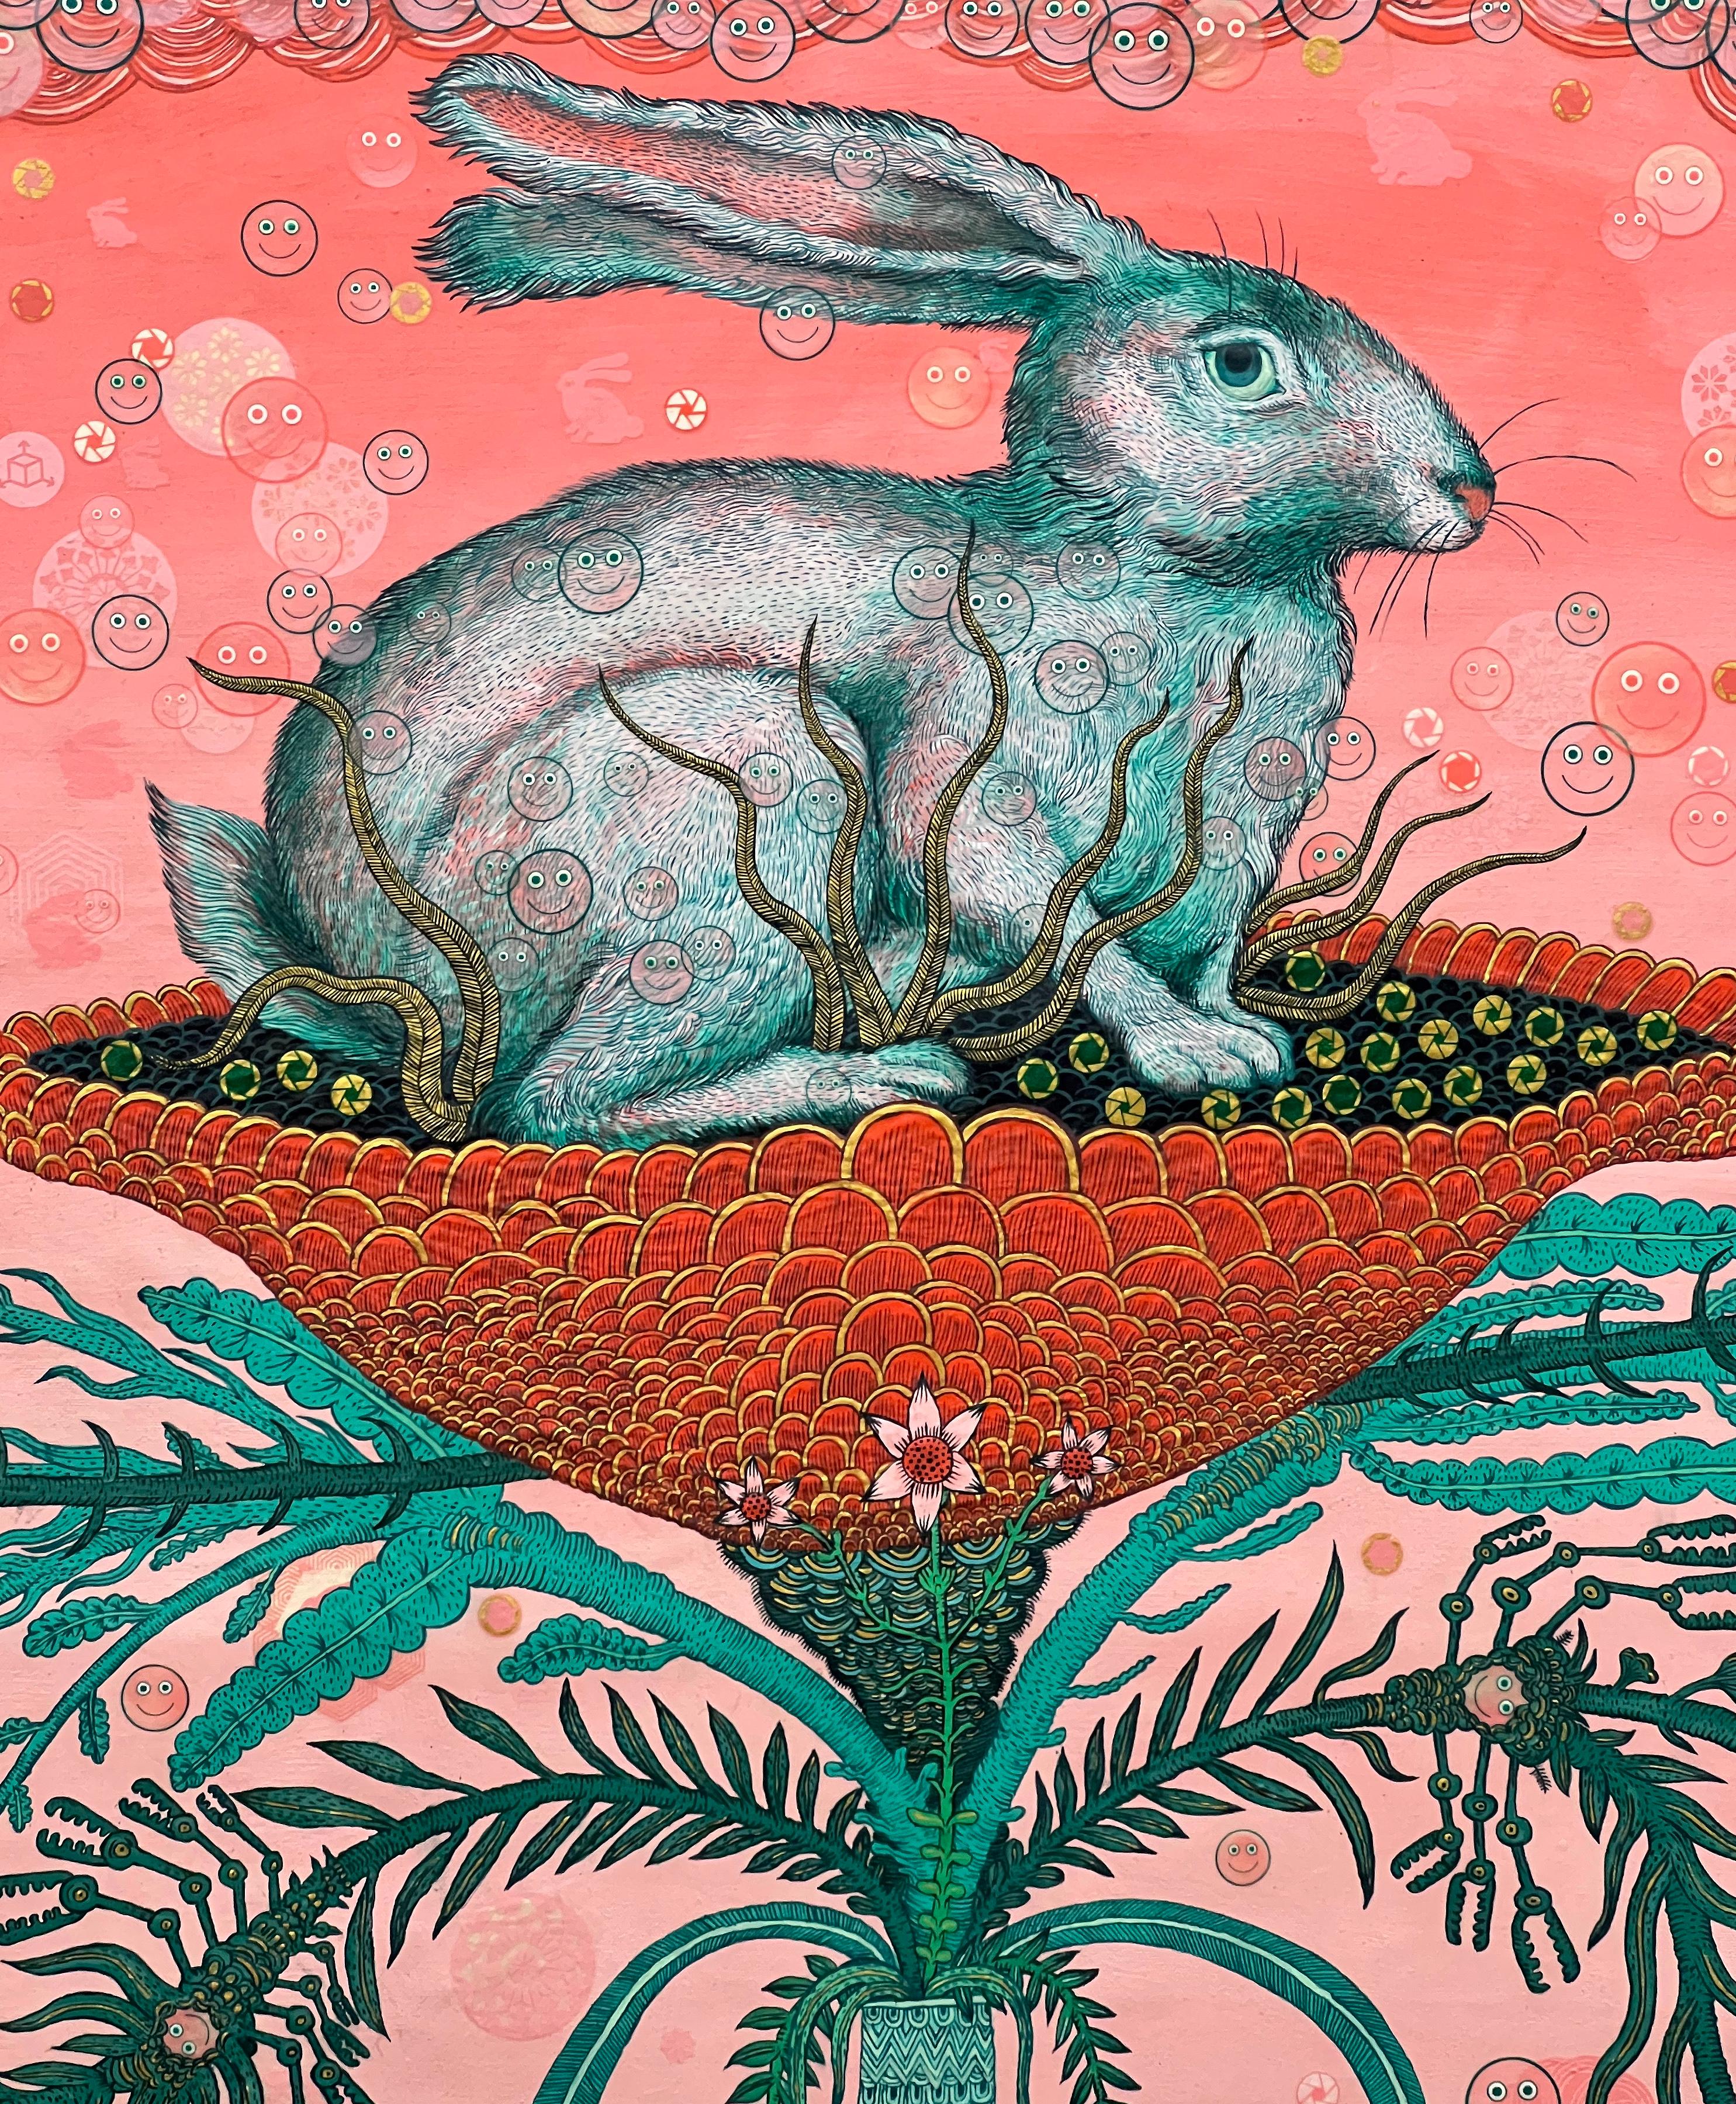 Rabbit Hole Singularity, Bunny, Flowers, Pink, Teal Surreal Botanical Landscape - Painting by Peter Hamlin